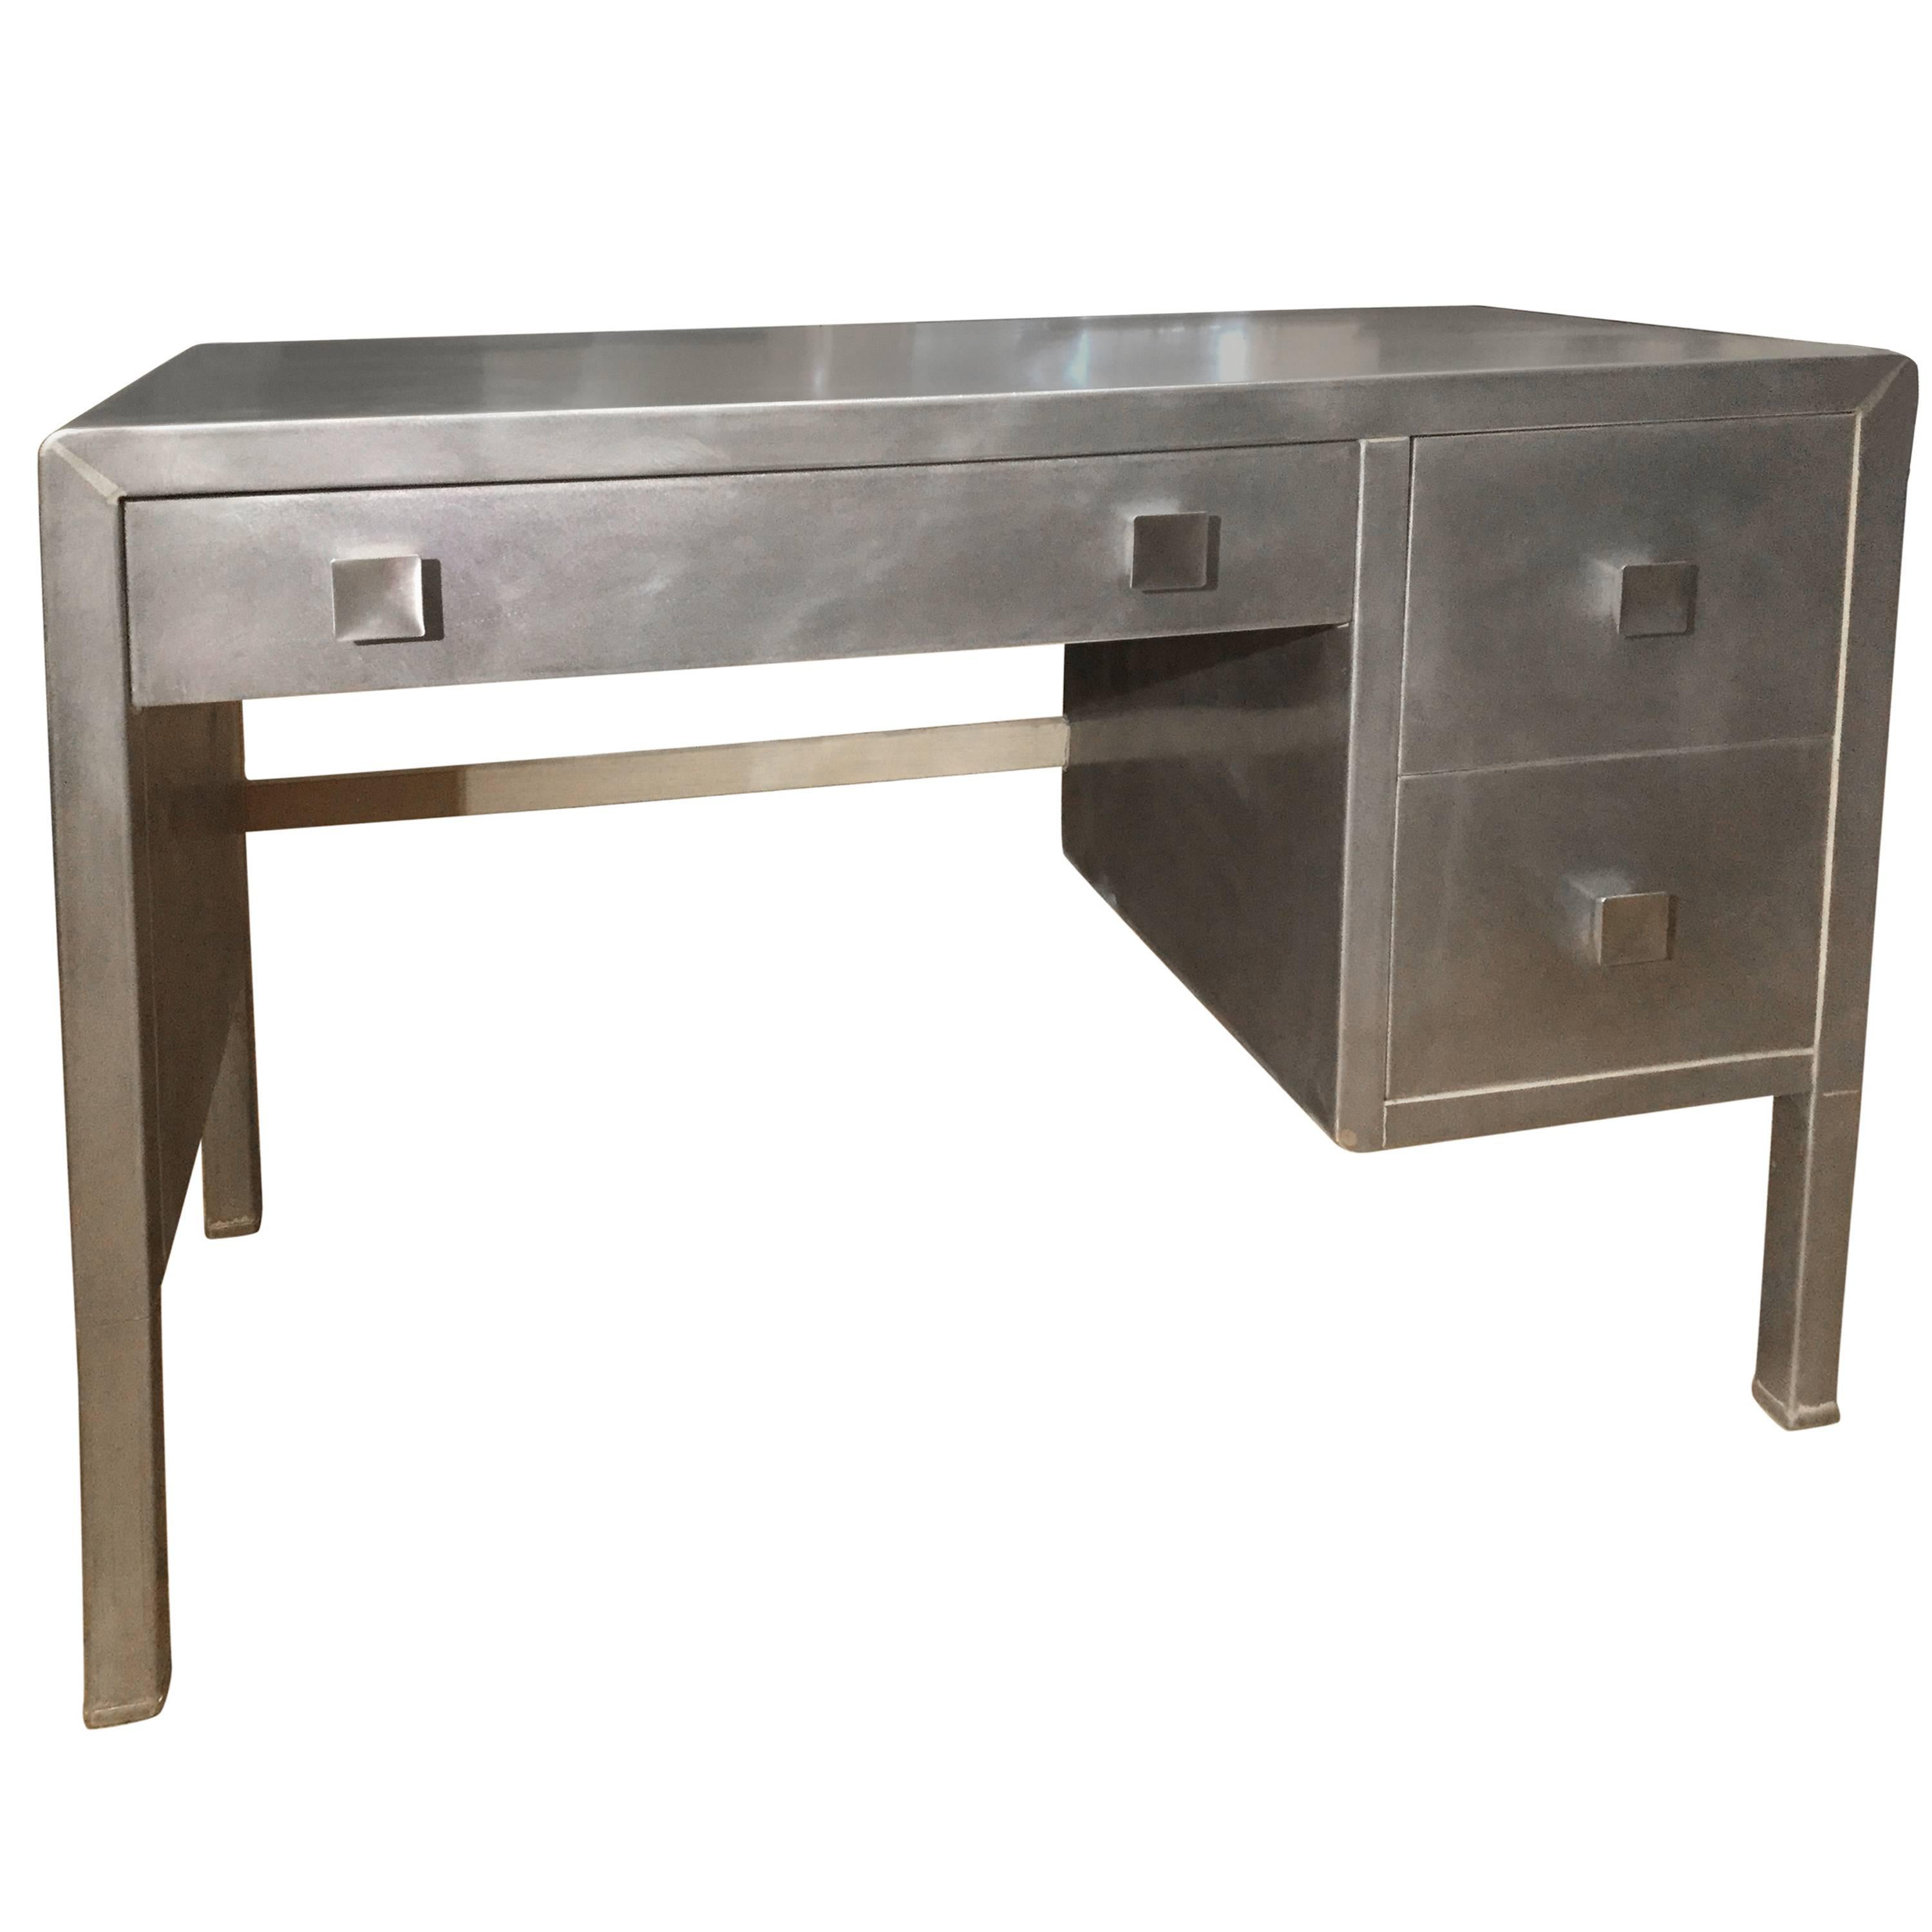 MCM Industrial Steel Desk by Bel Geddes For Sale